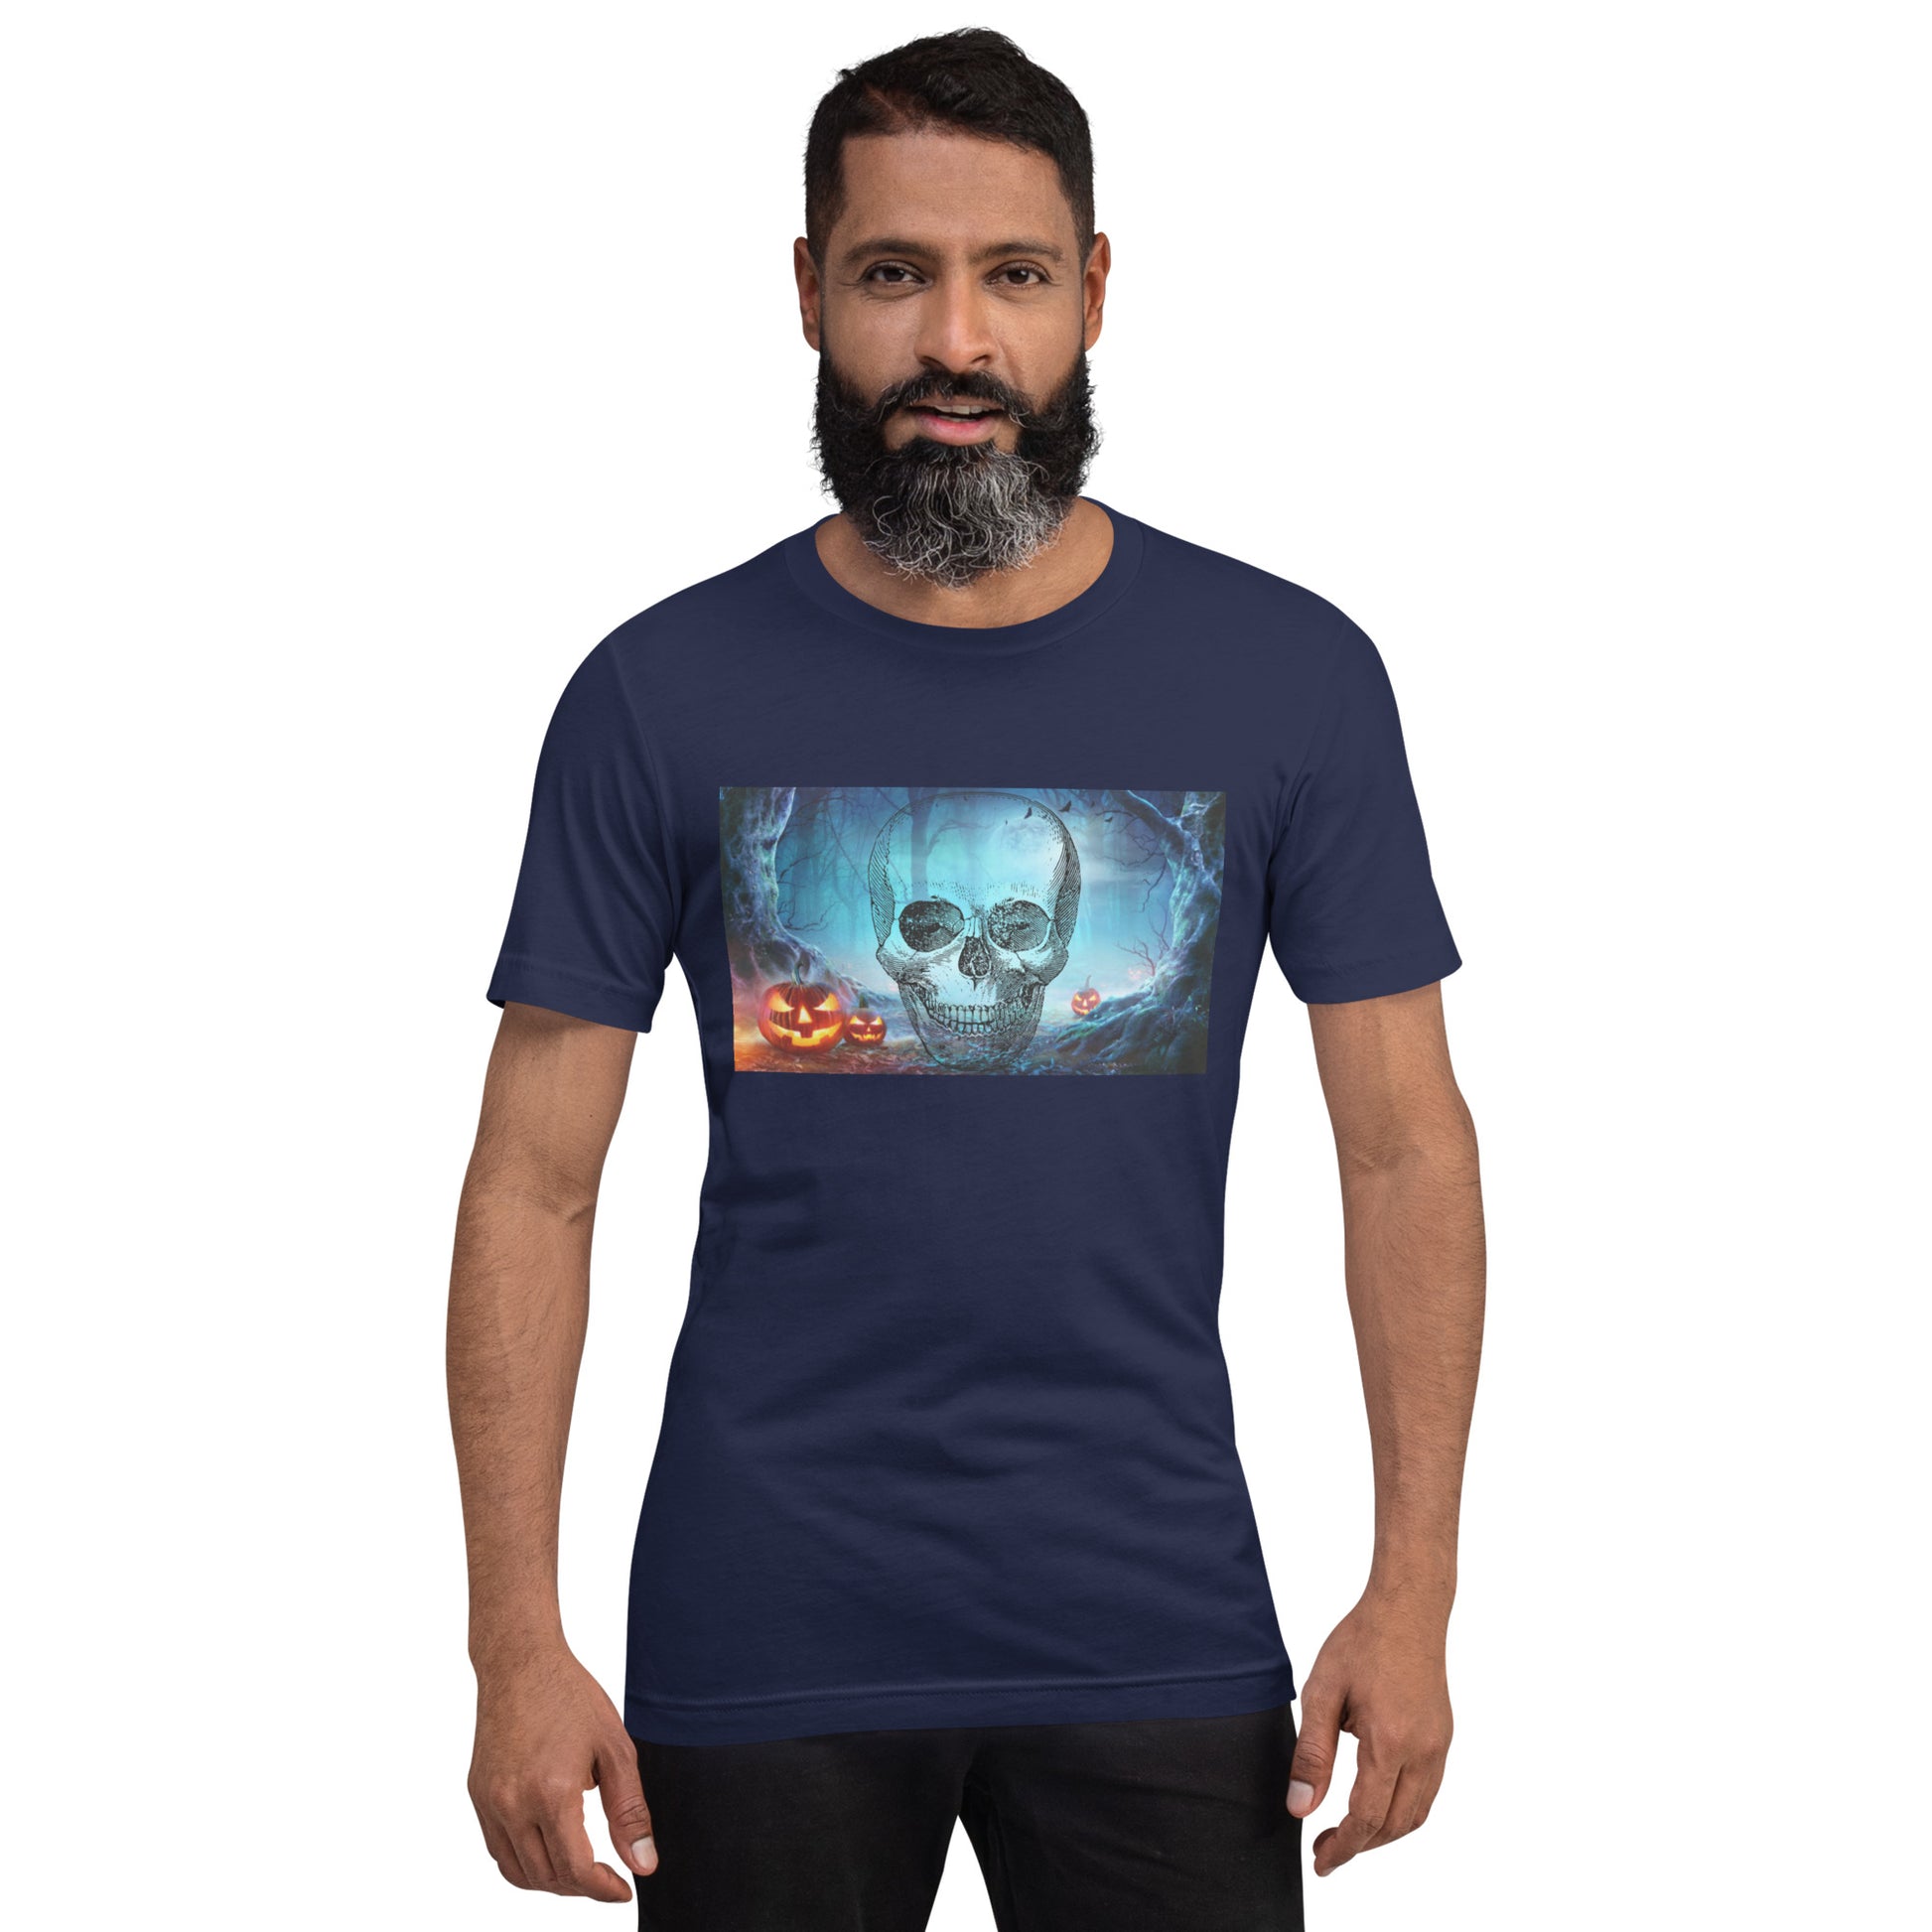 Misty O'Lantern Skull Unisex Basic T-Shirt TeeSpect